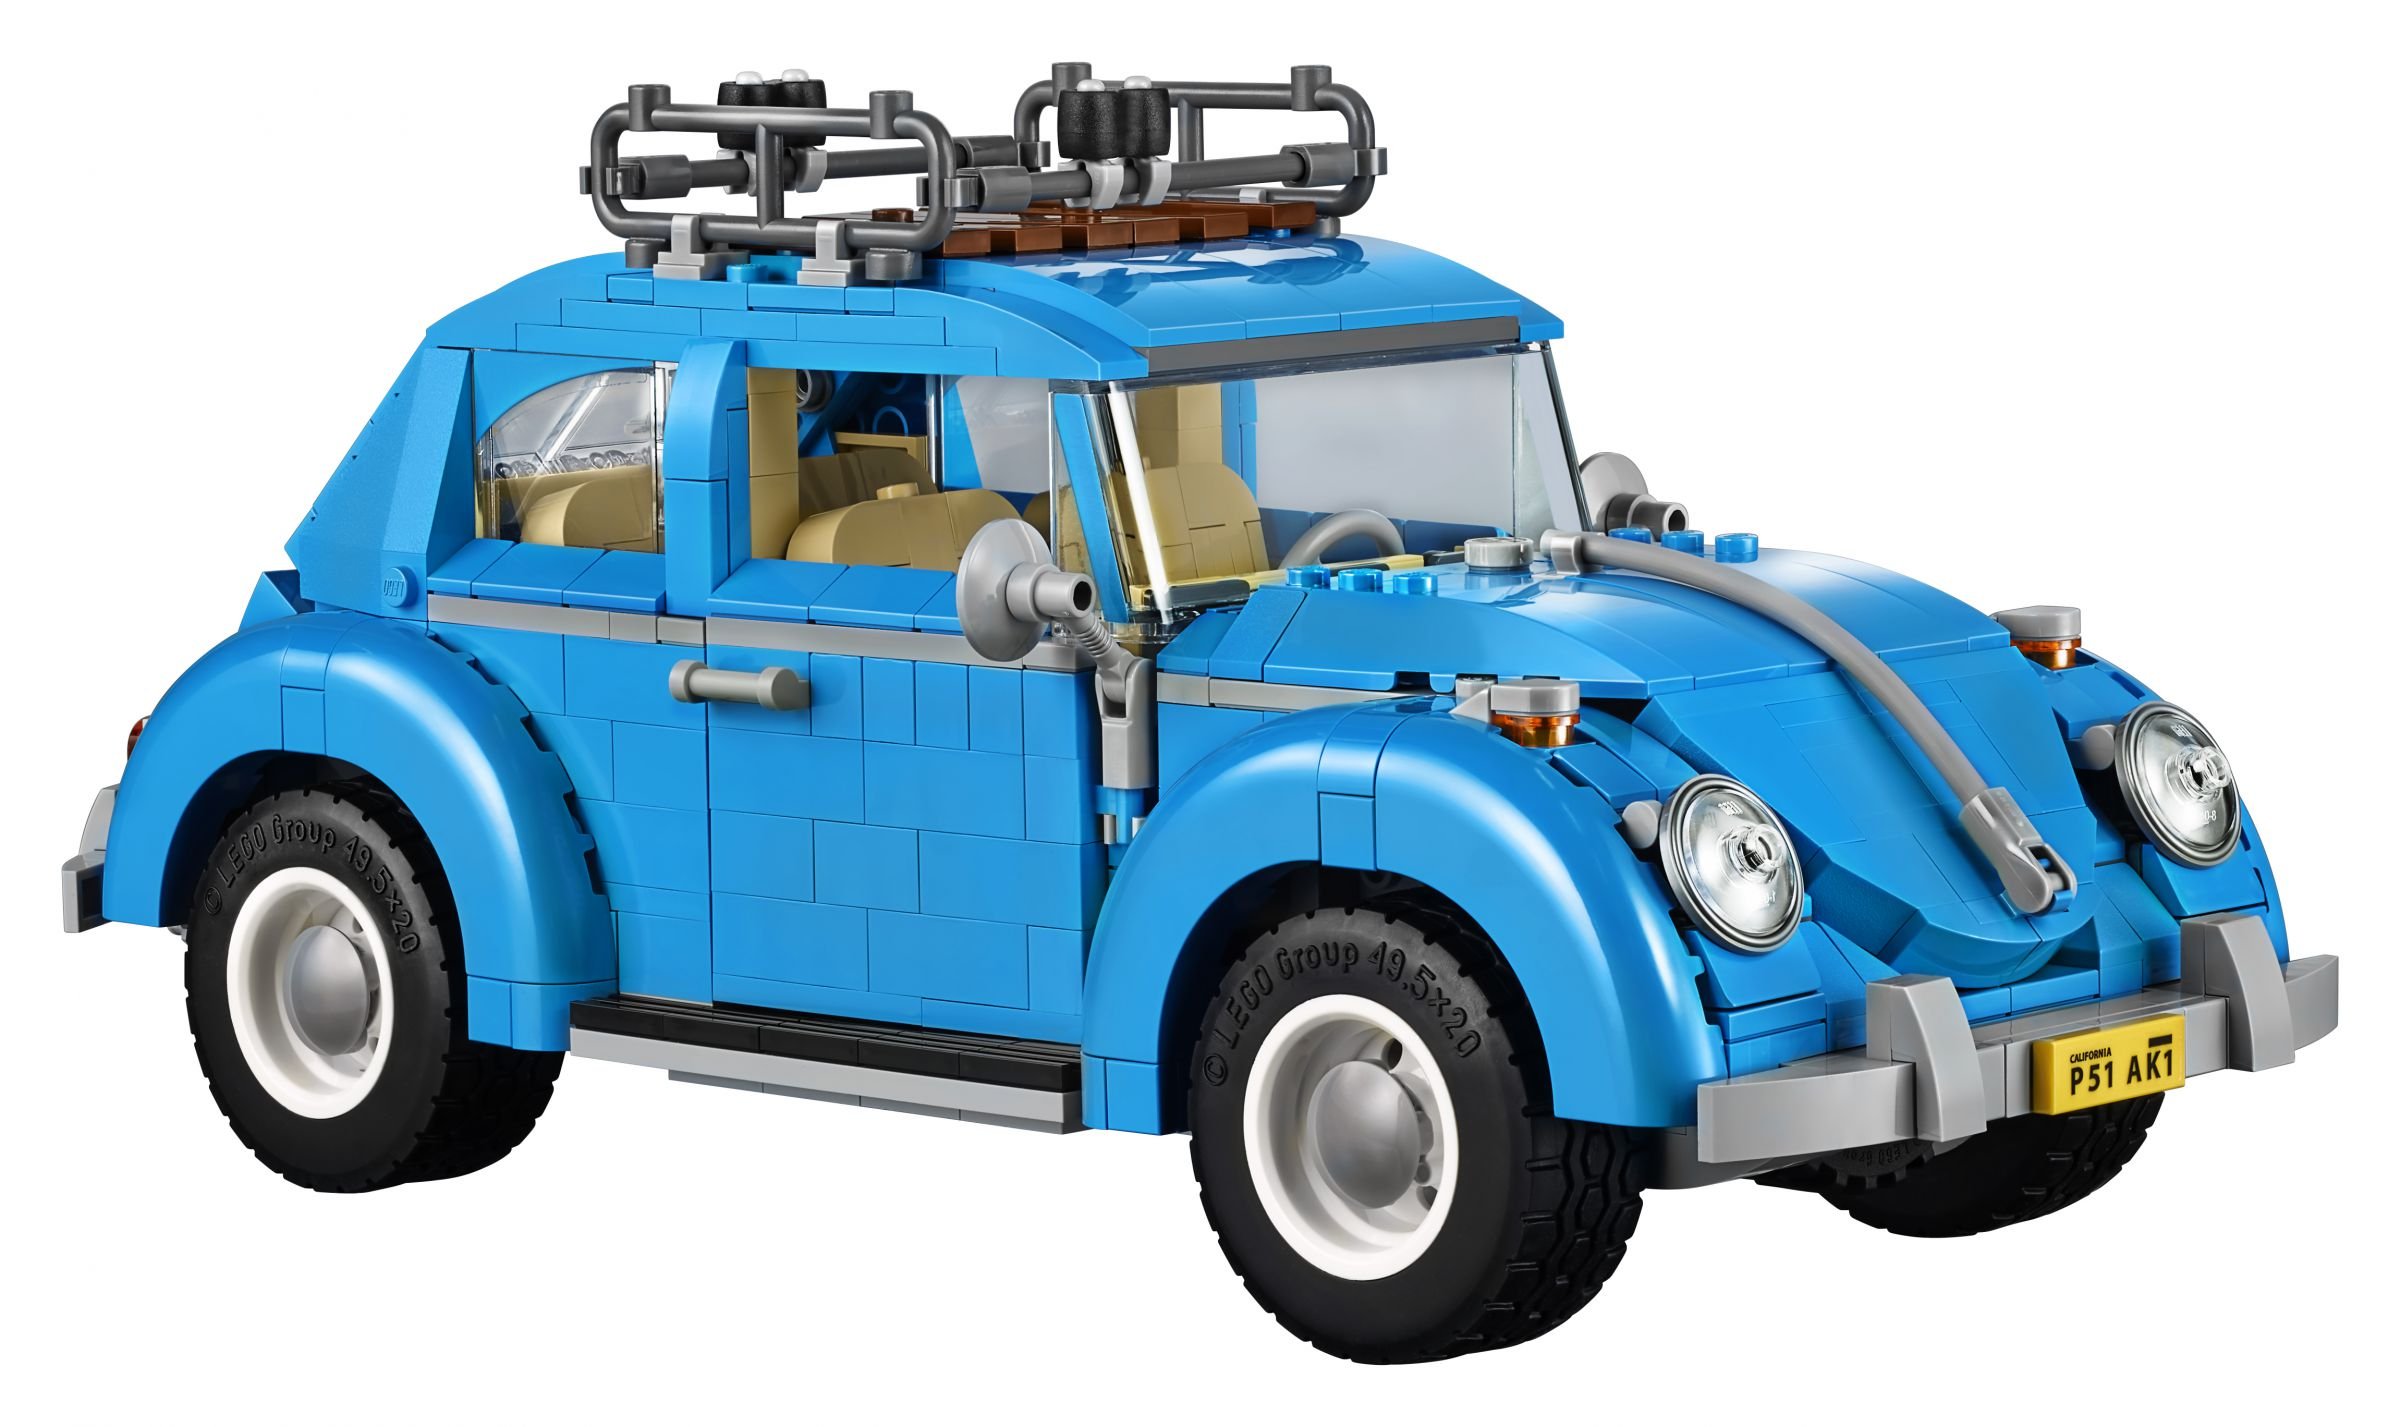 LEGO Advanced Models 10252 VW Käfer LEGO_10252_Volkswagen_Beetle_10.jpg